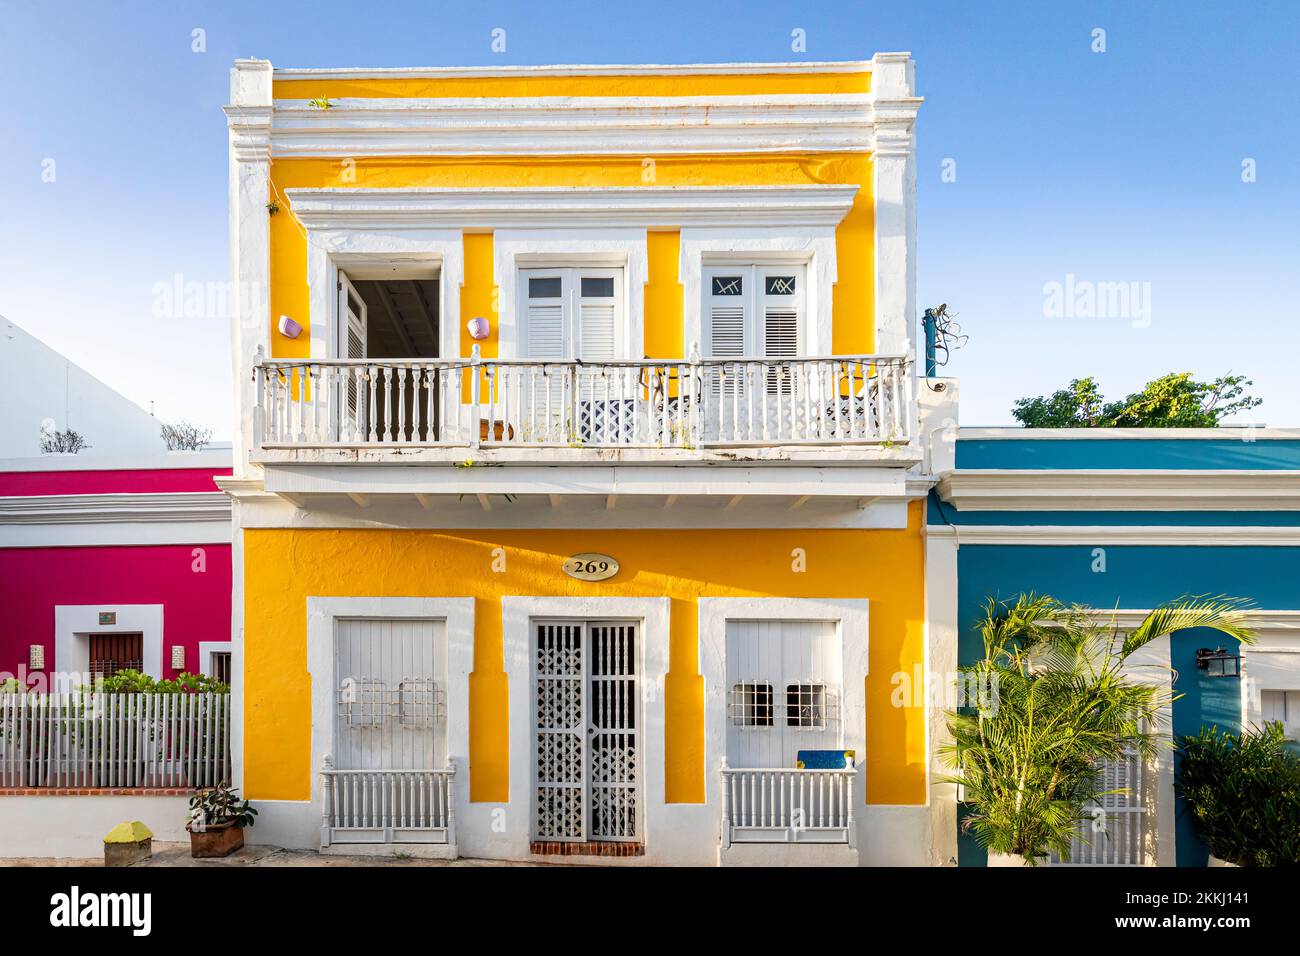 Farbenfrohe Gebäude entlang der San Sebastian Street in Old San Juan auf der tropischen Karibikinsel Puerto Rico, USA. Stockfoto